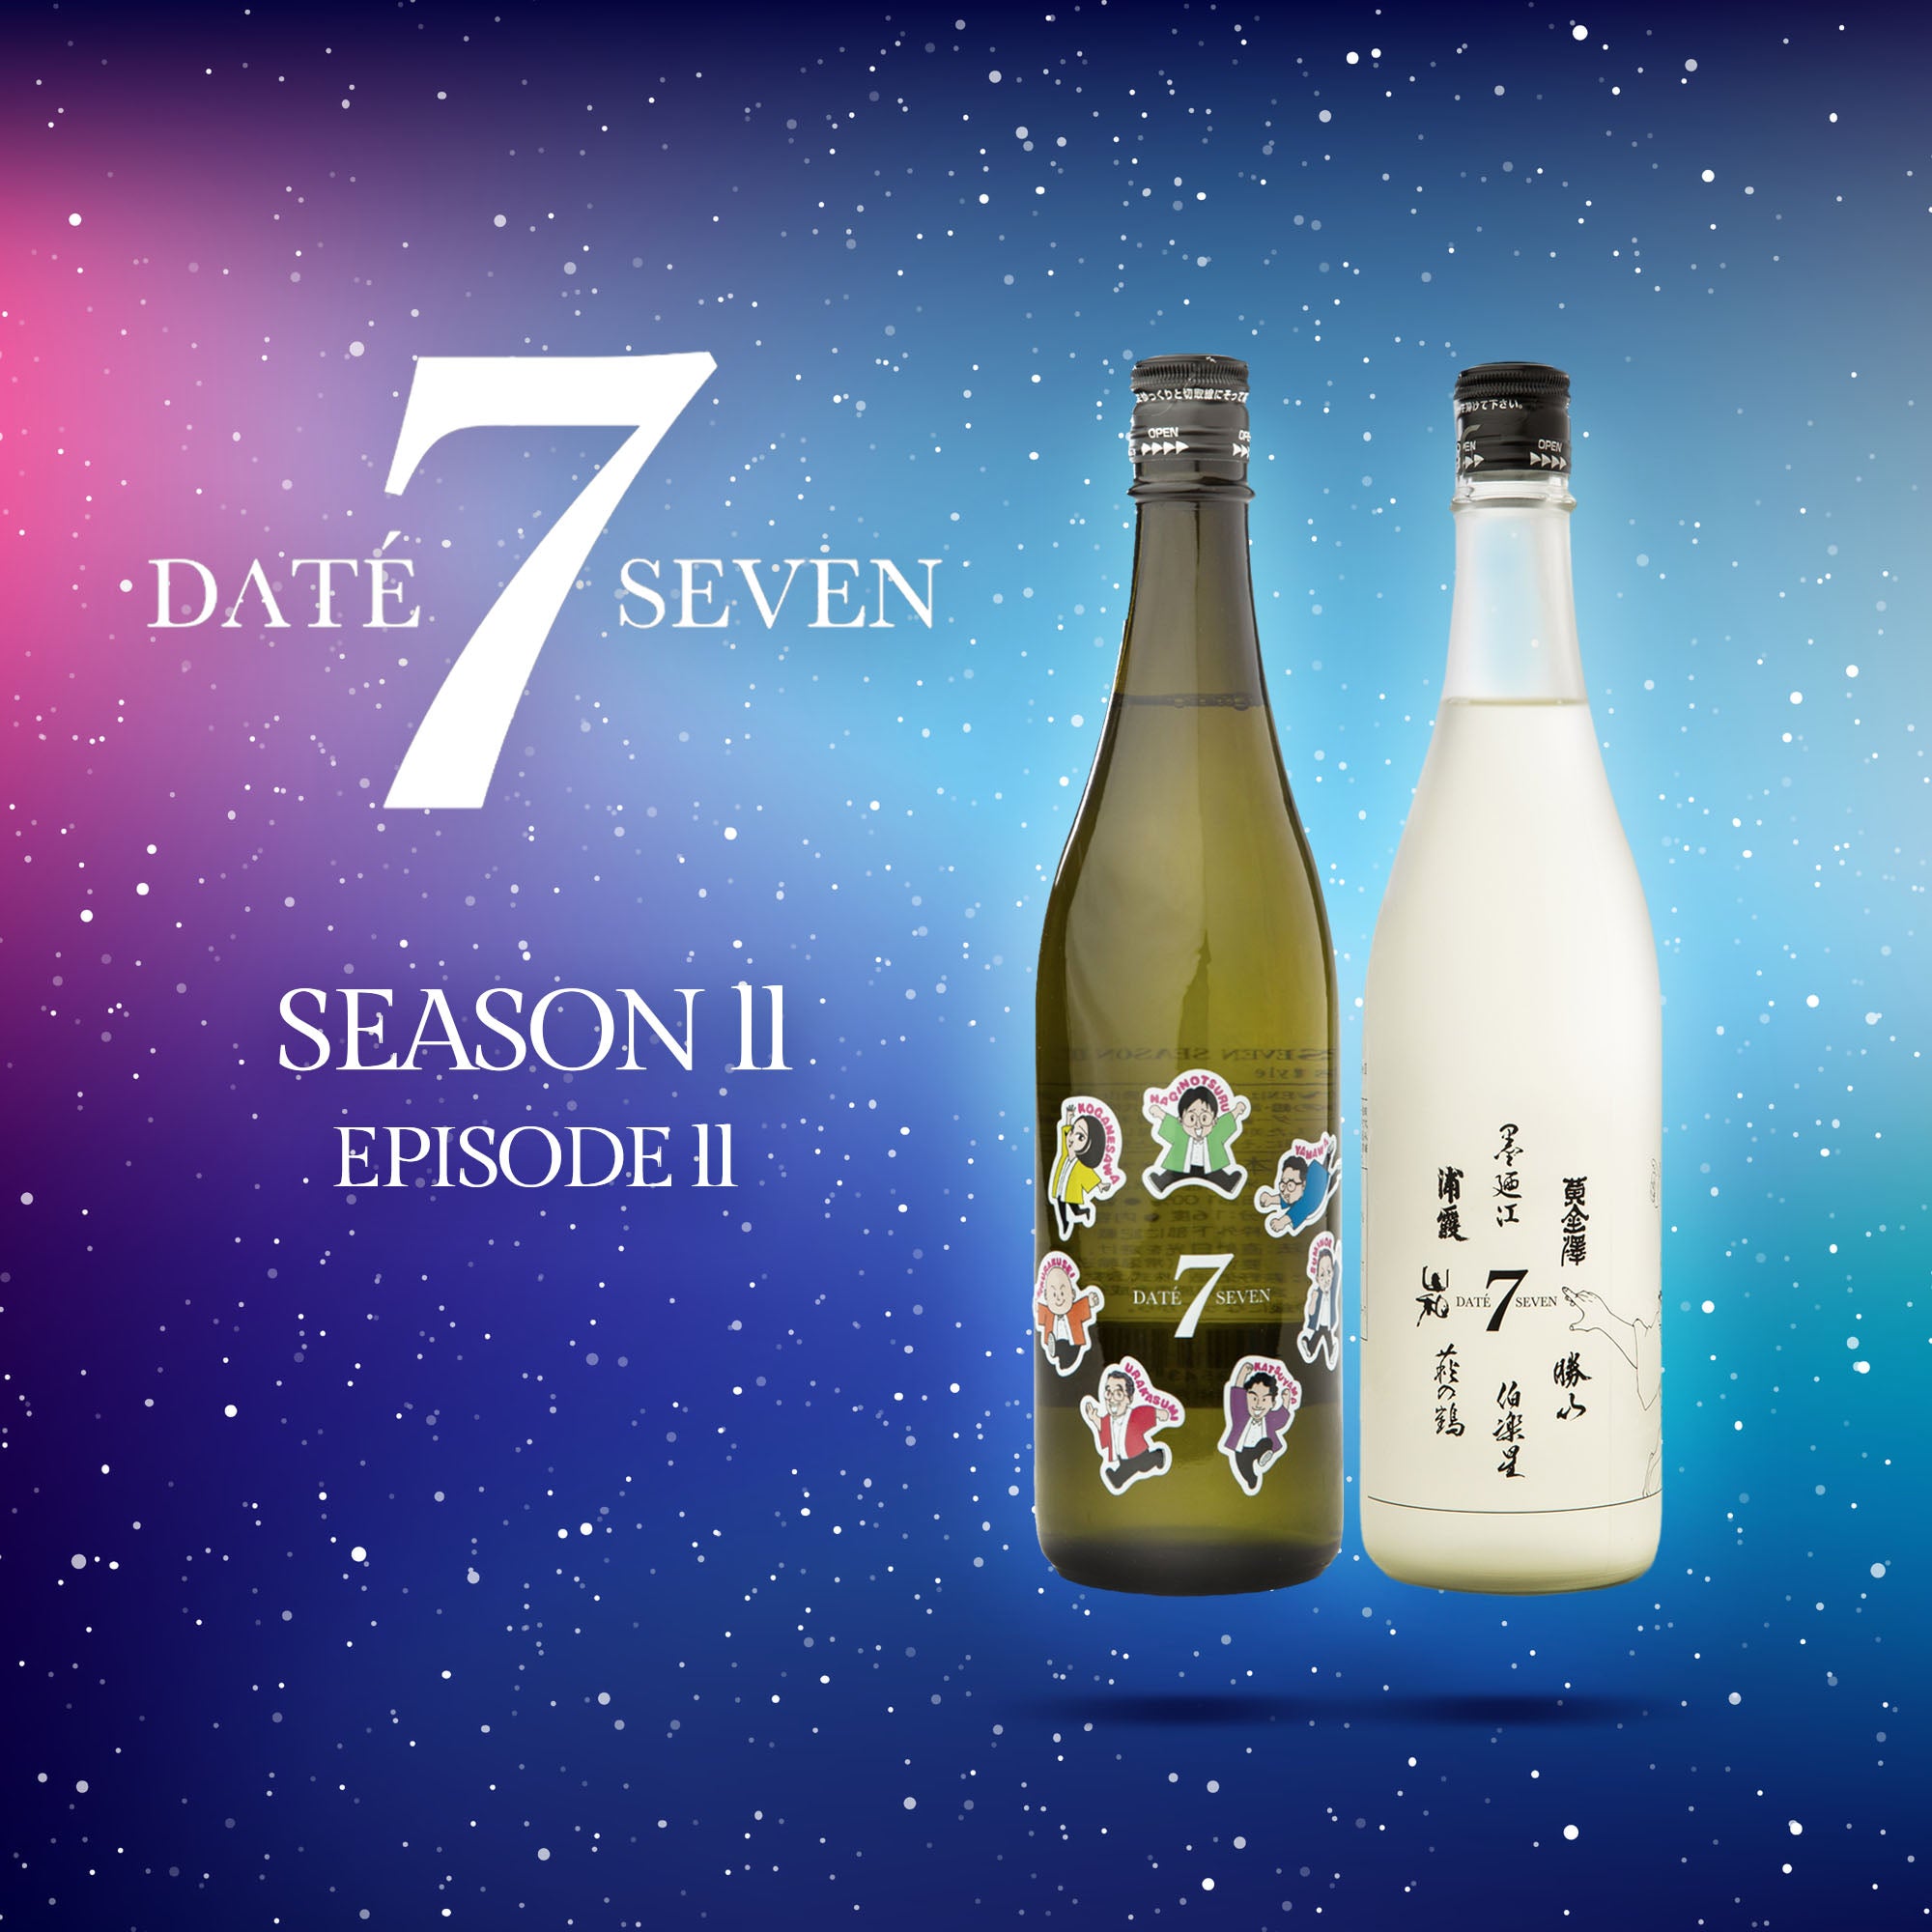 Date 7, Season II, Episode 2 (2 x 720ml) – SAKE MAMA | 日本酒ママ